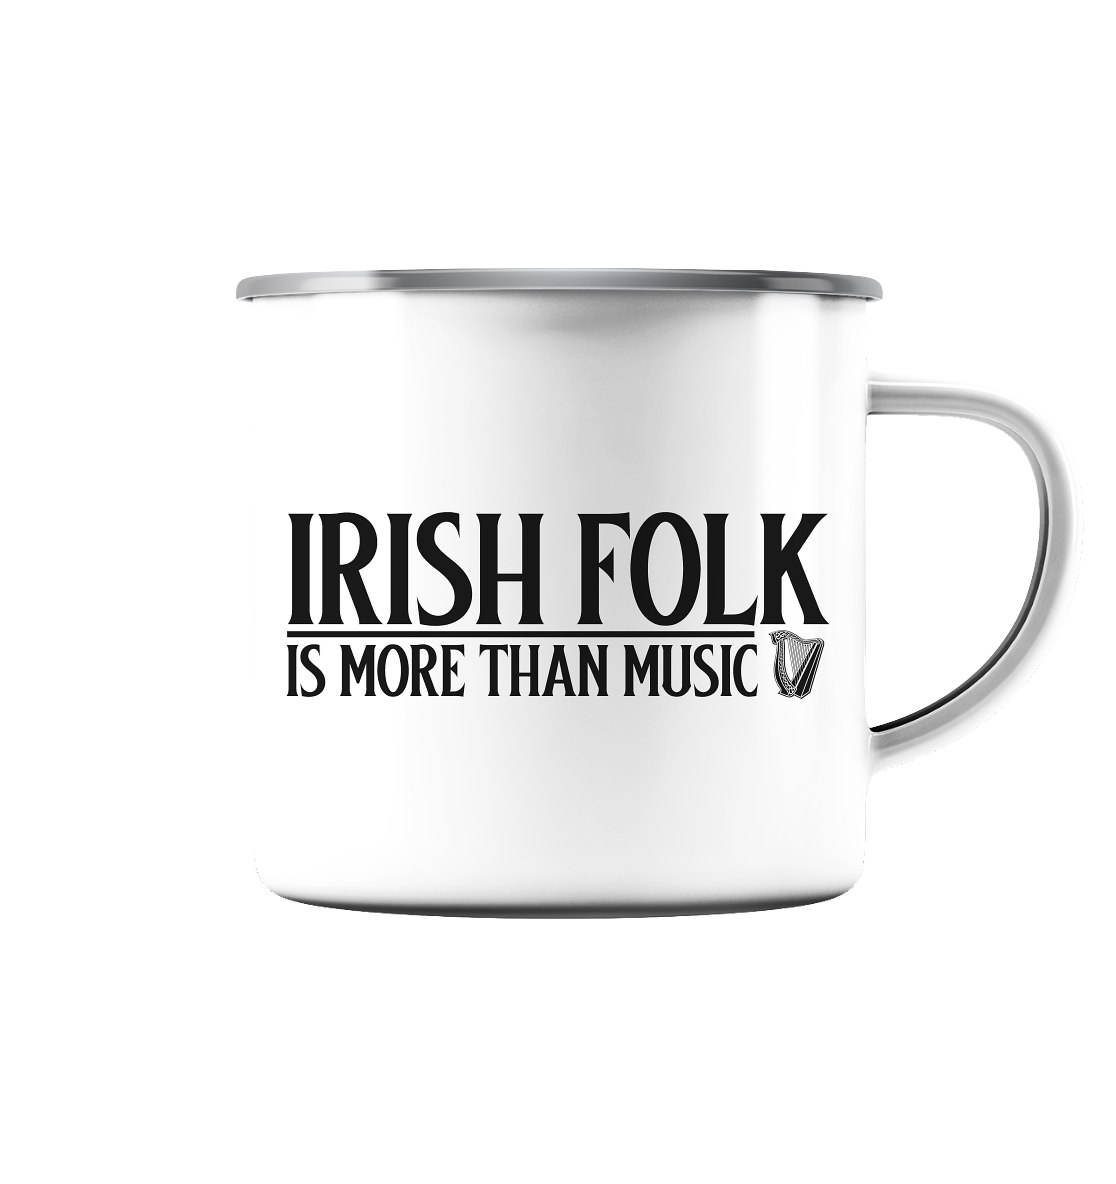 Irish Folk "Is More Than Music" - Emaille Tasse (Silber)